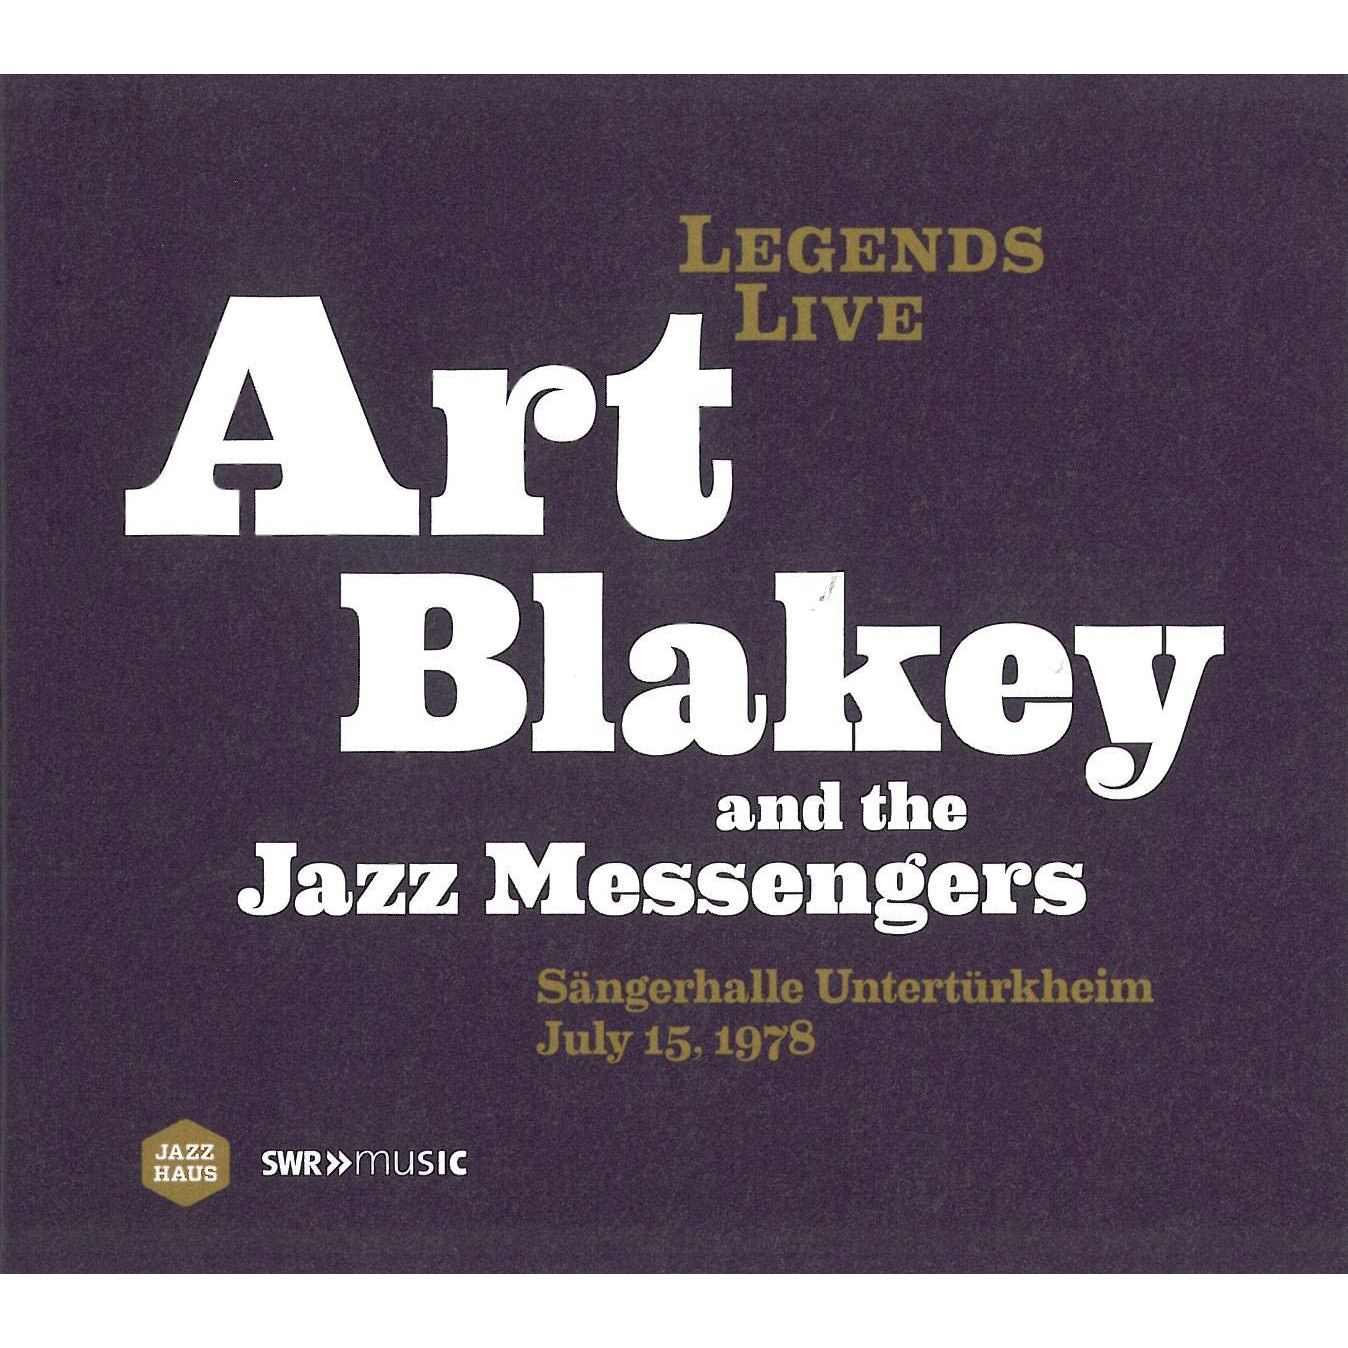 ART BLAKEY AND THE JAZZ MESSENGERS